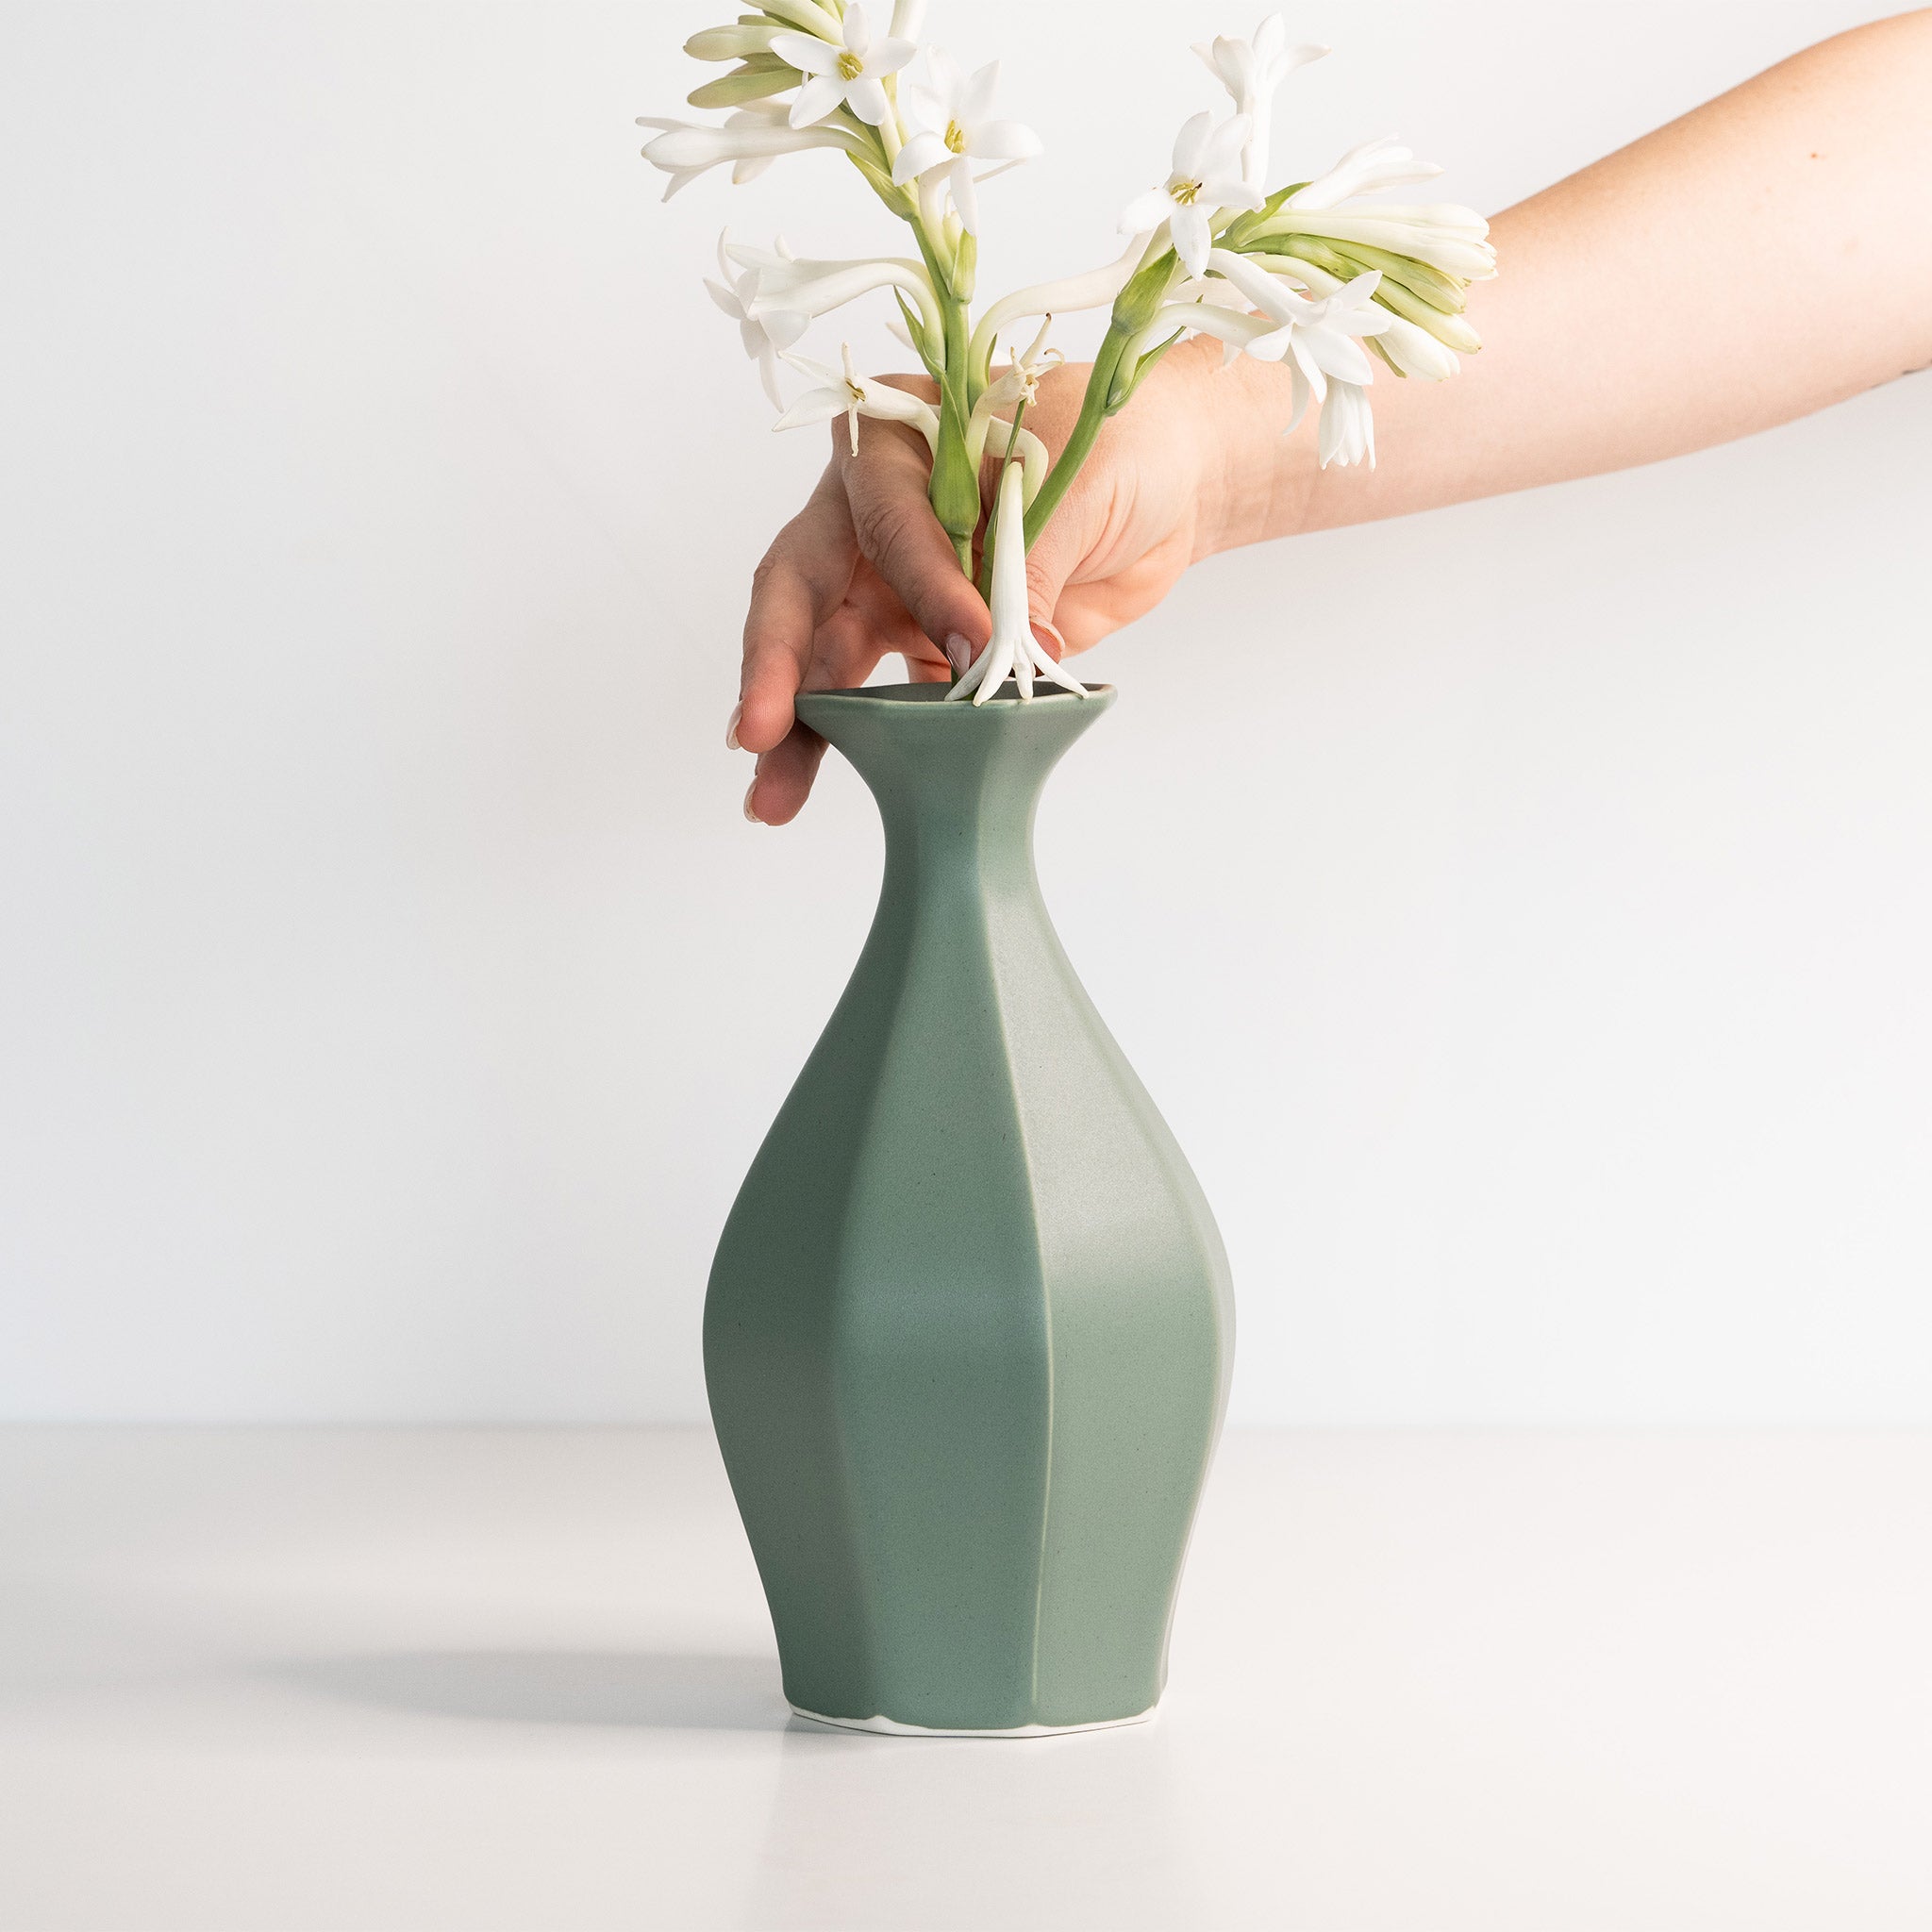 Handmade Porcelain Ceramic Table Vase - The Bright Angle